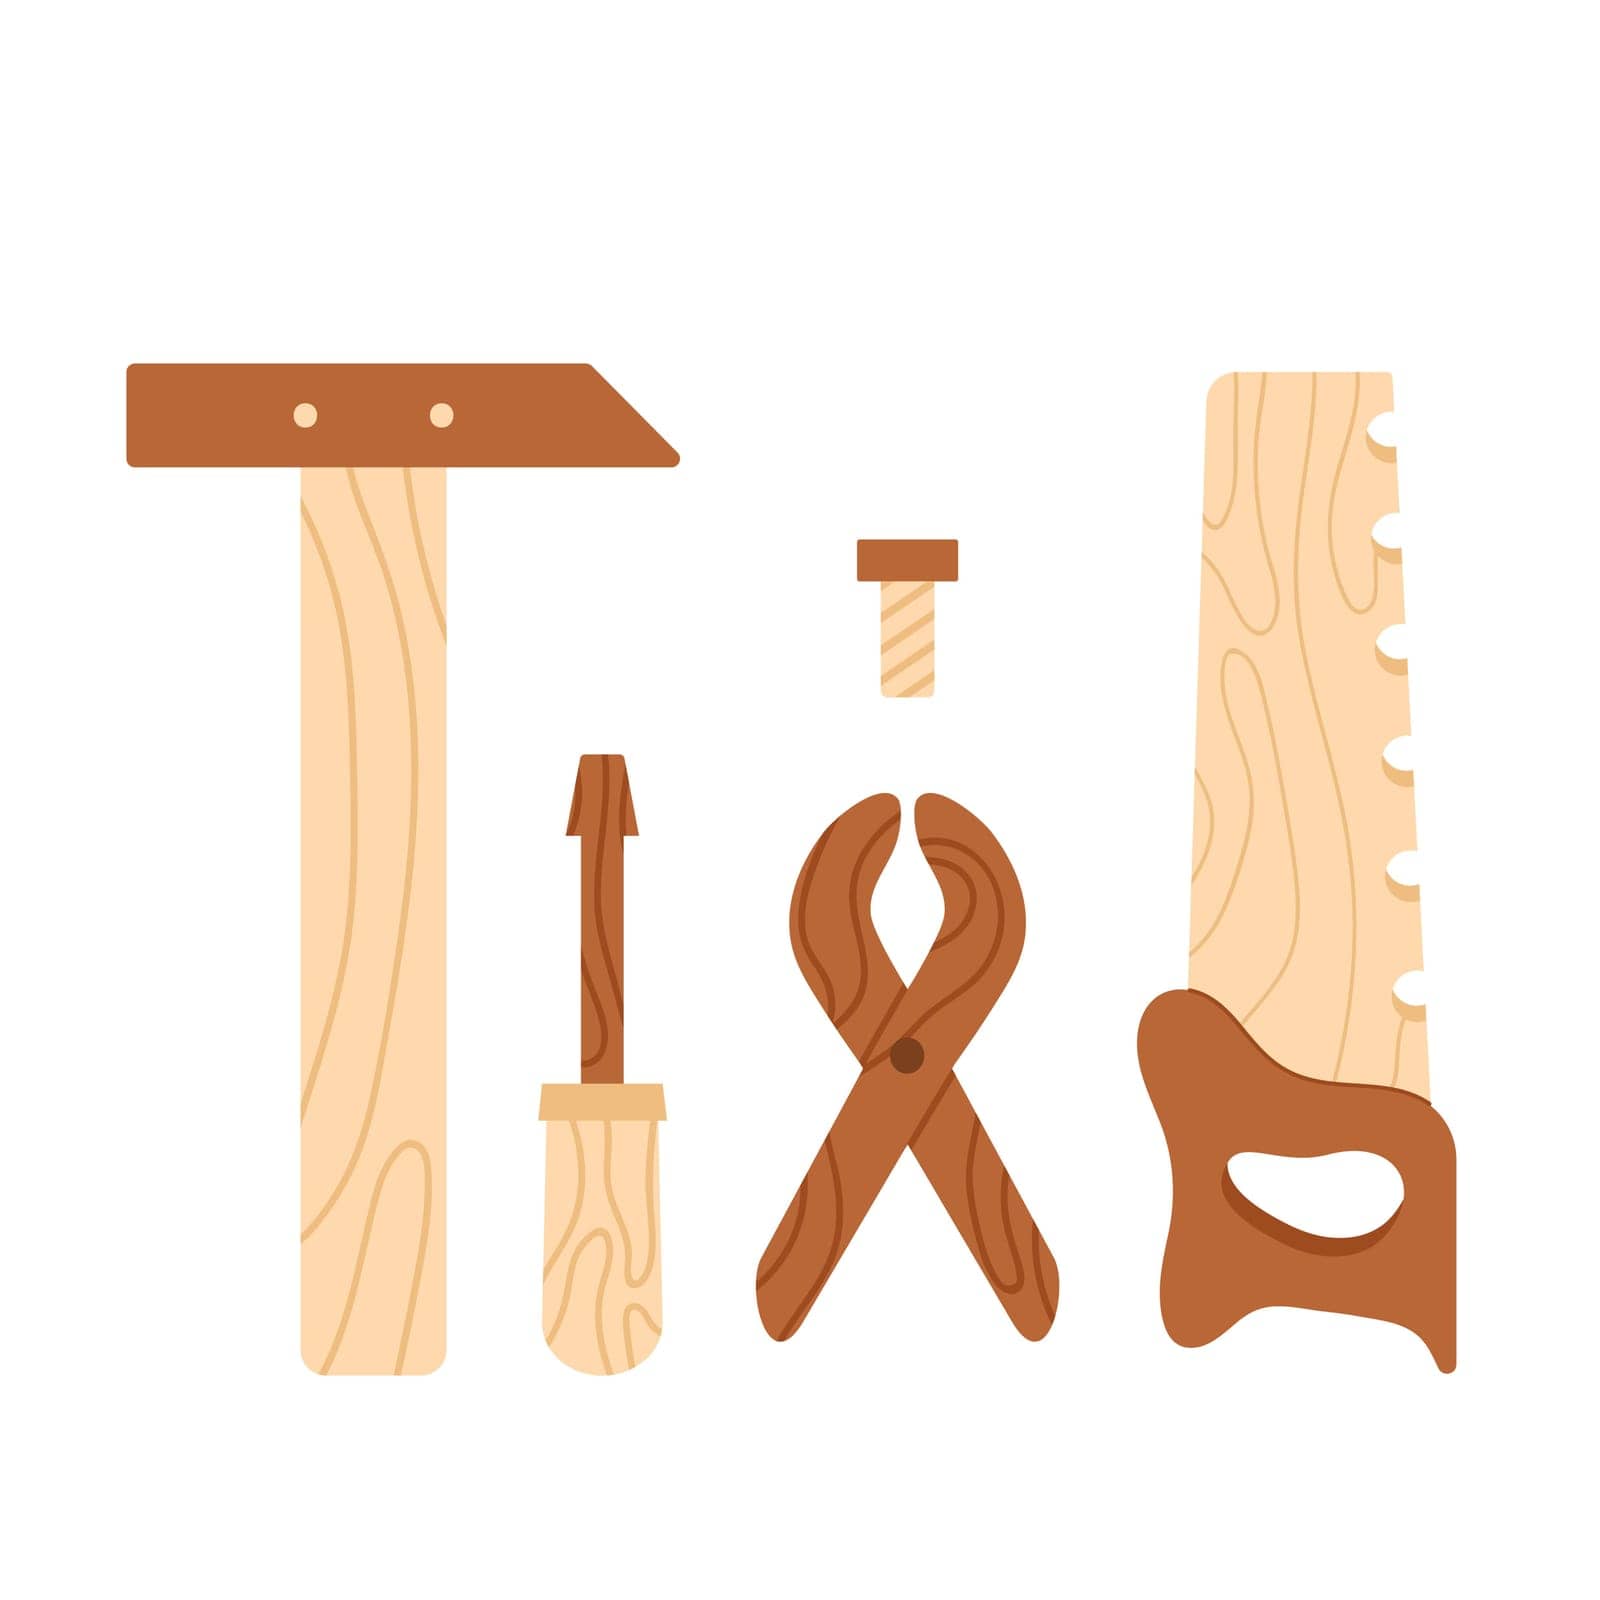 Wooden tool kit toy. Retro traditional wooden toys, kids entertainment cartoon vector illustration